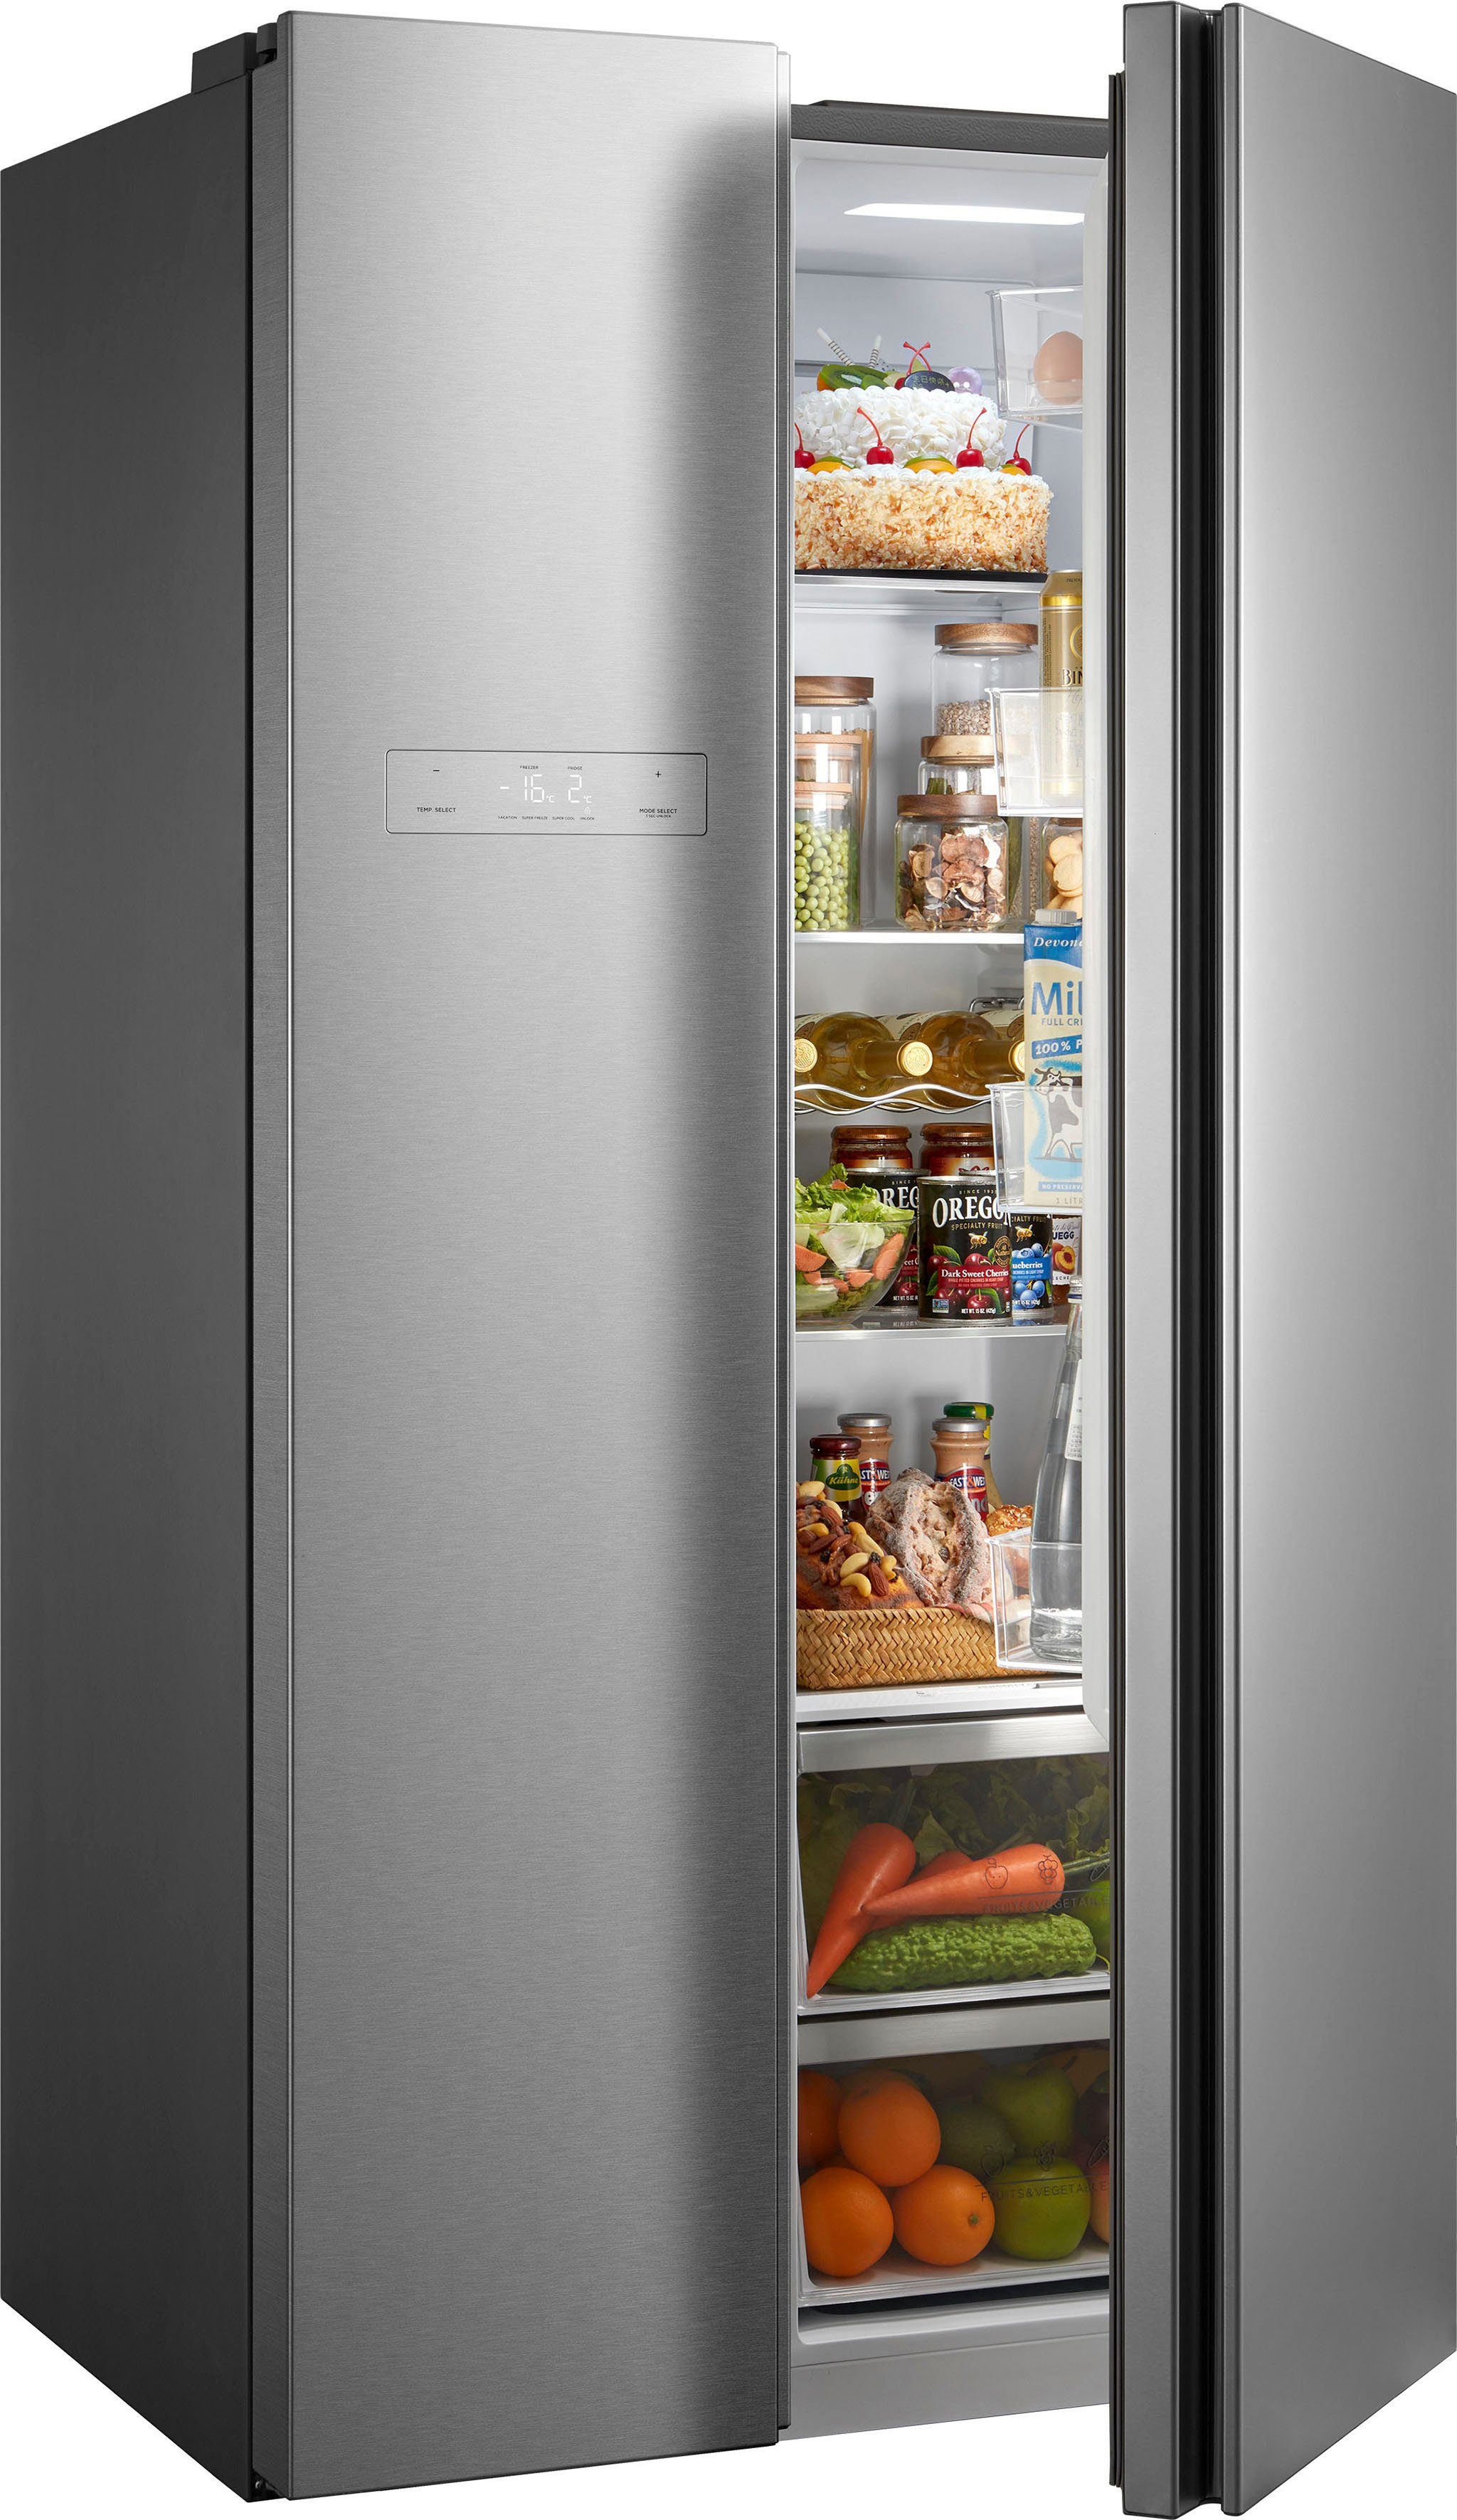 Schwarze Hanseatic Side-by-Side-Kühlschränke kaufen | OTTO